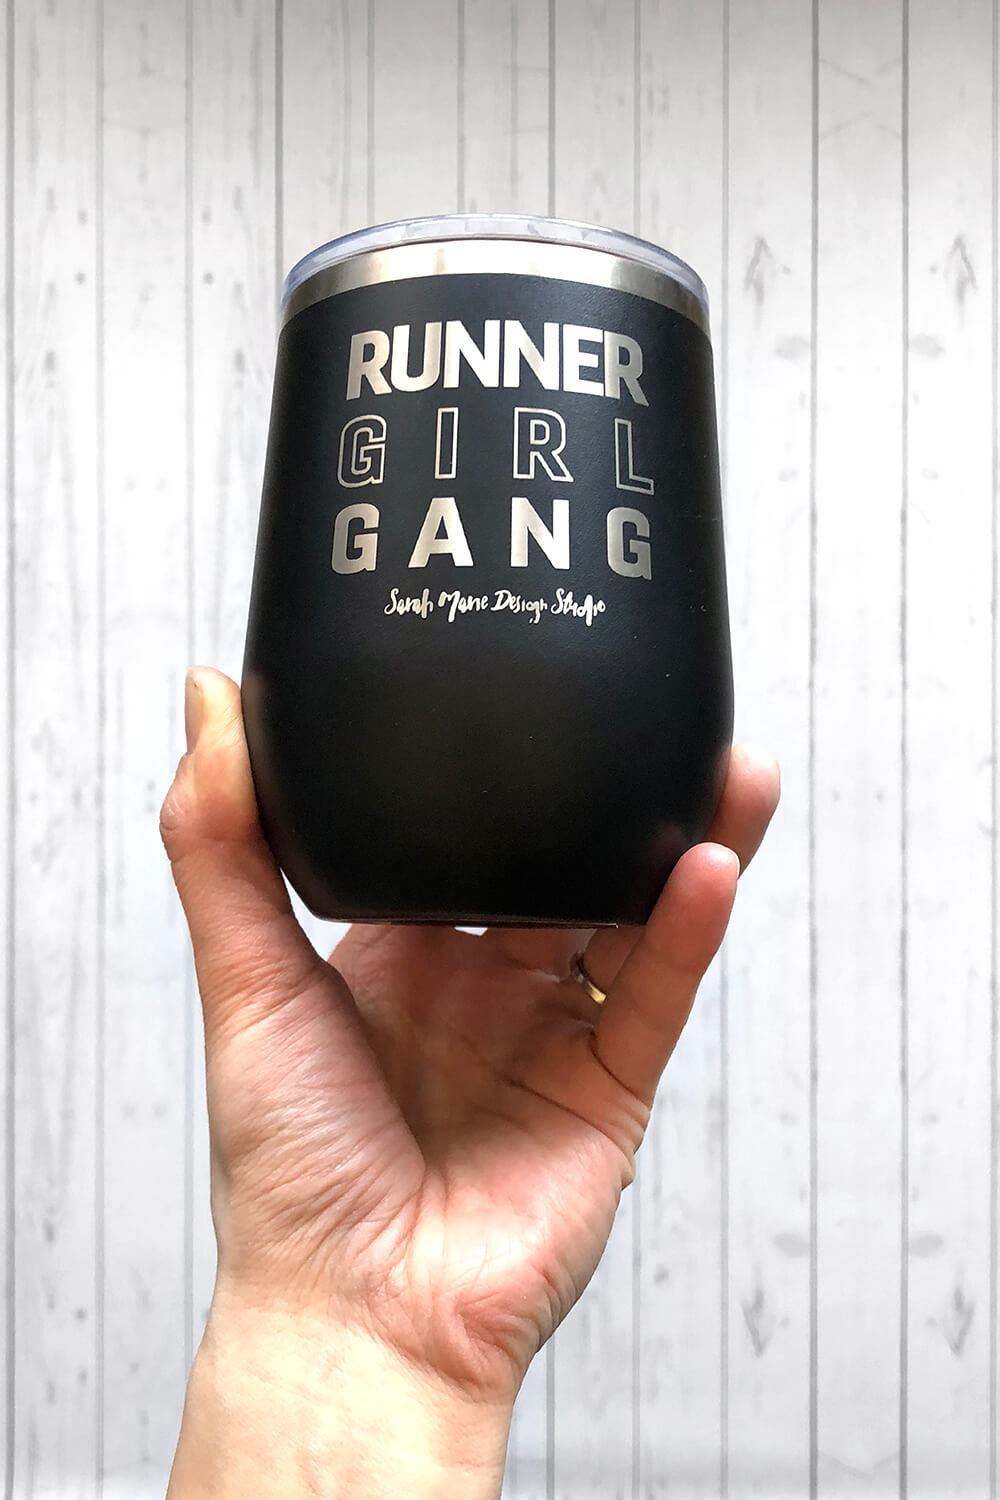 Runner Girl Gang Wine Tumbler - Sarah Marie Design Studio